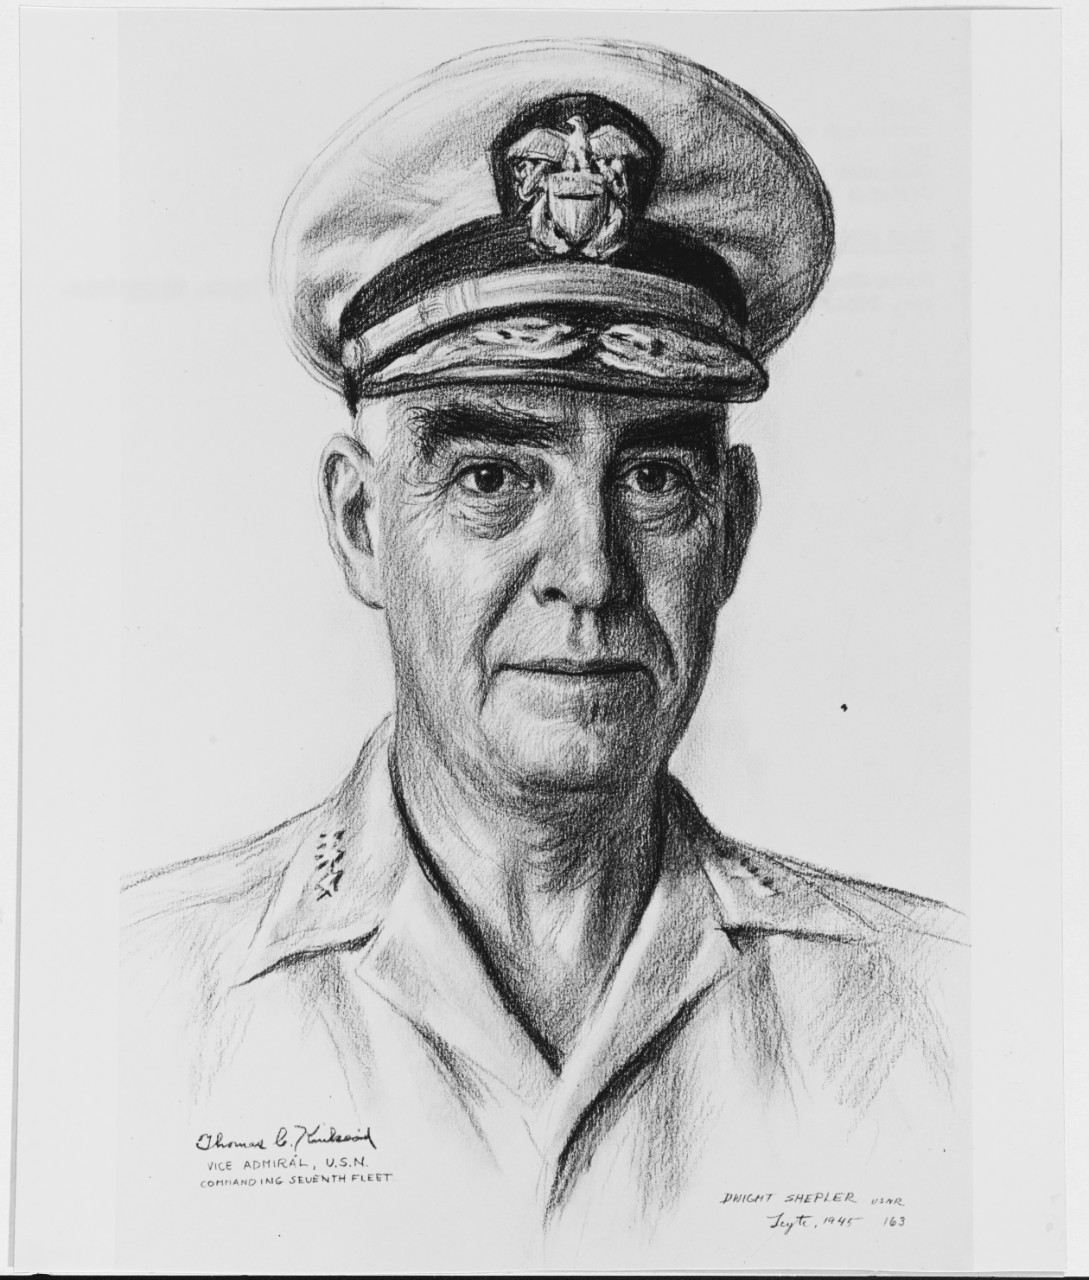 Photo #: 80-G-184952  Vice Admiral Thomas C. Kinkaid, USN, Commander Seventh Fleet  